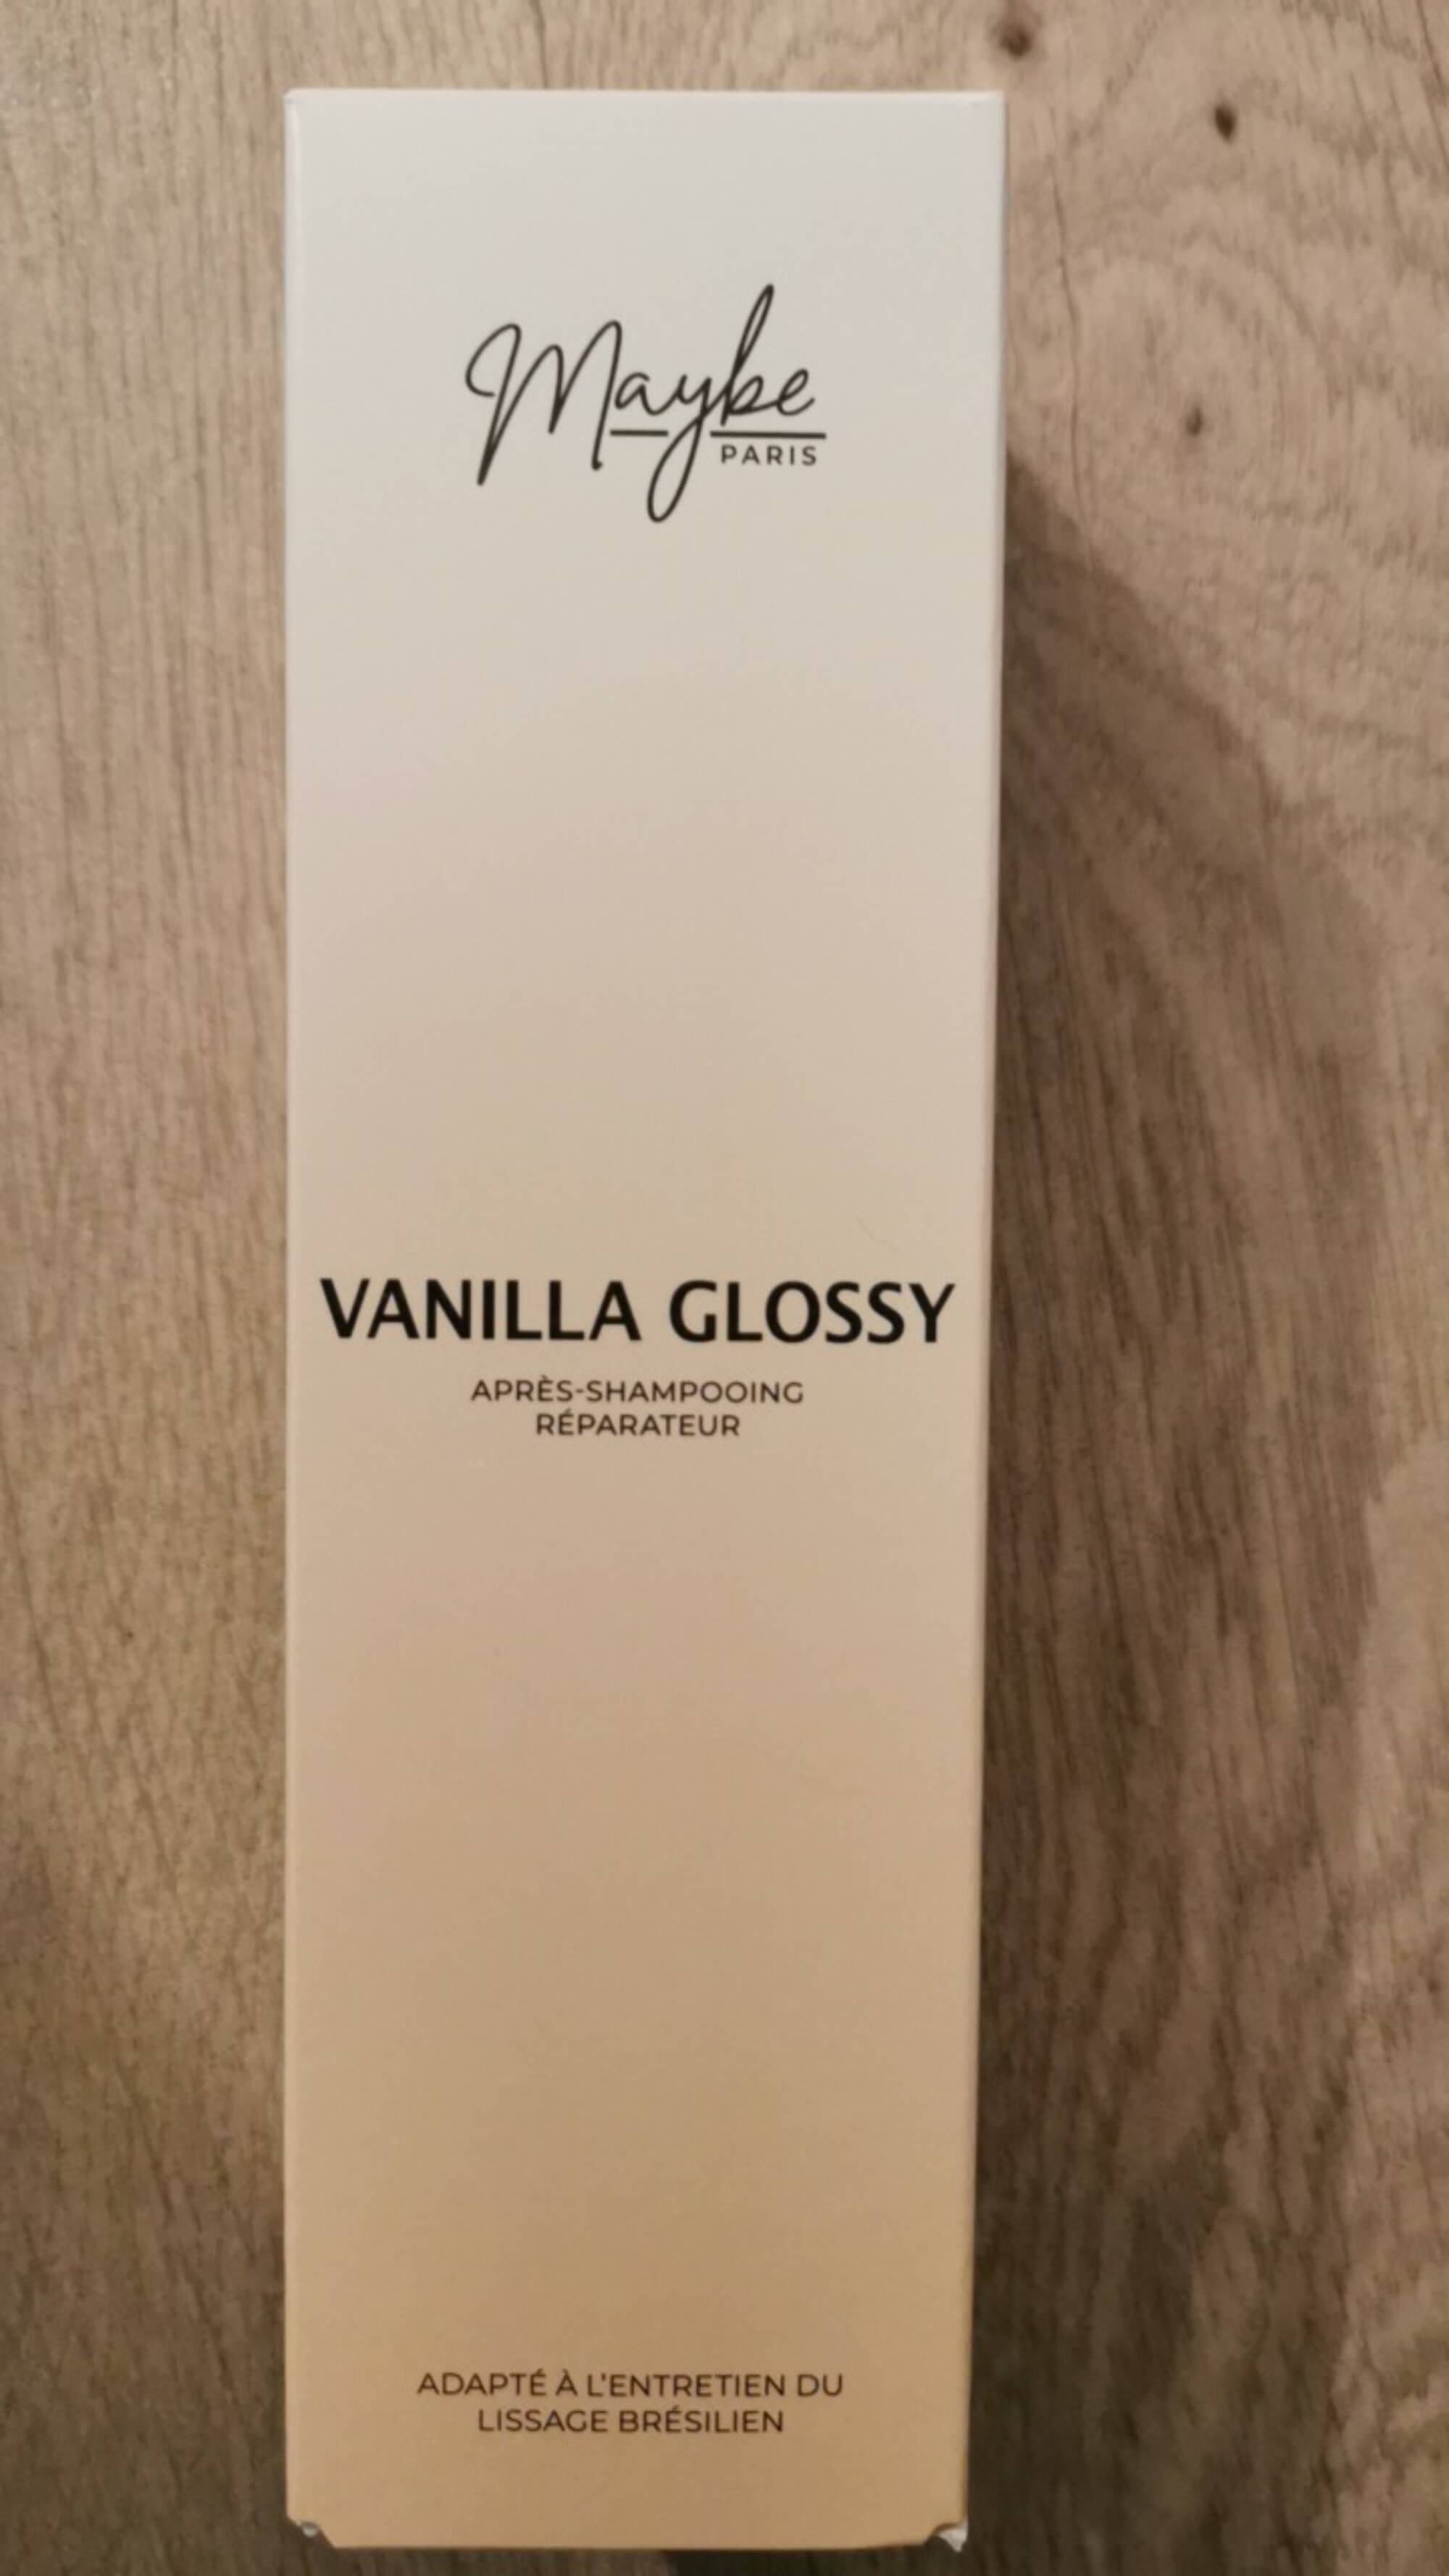 MAYBE PARIS - Vanilla Glossy - Après-shampooing réparateur